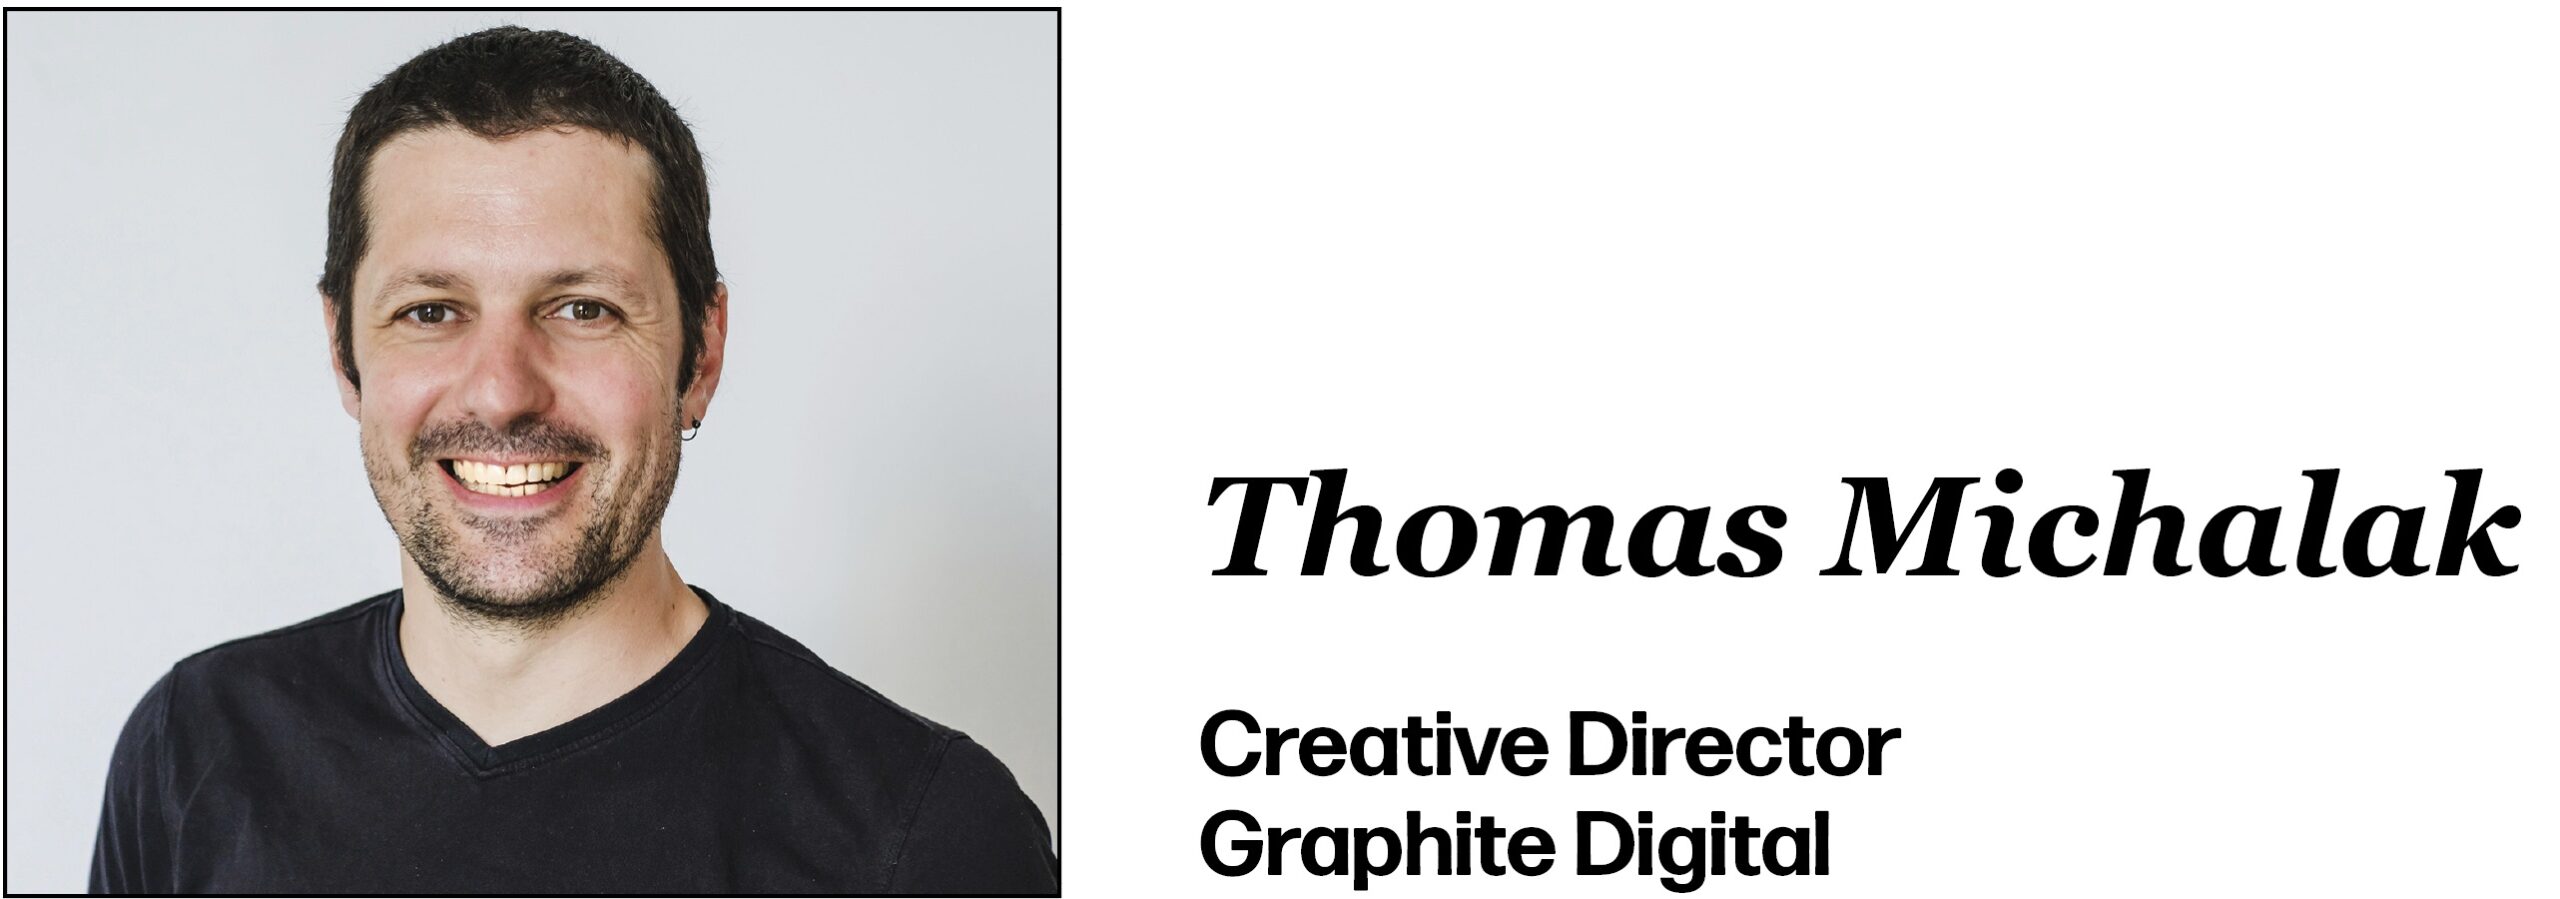 Thomas Michalak Creative Director Graphite Digital